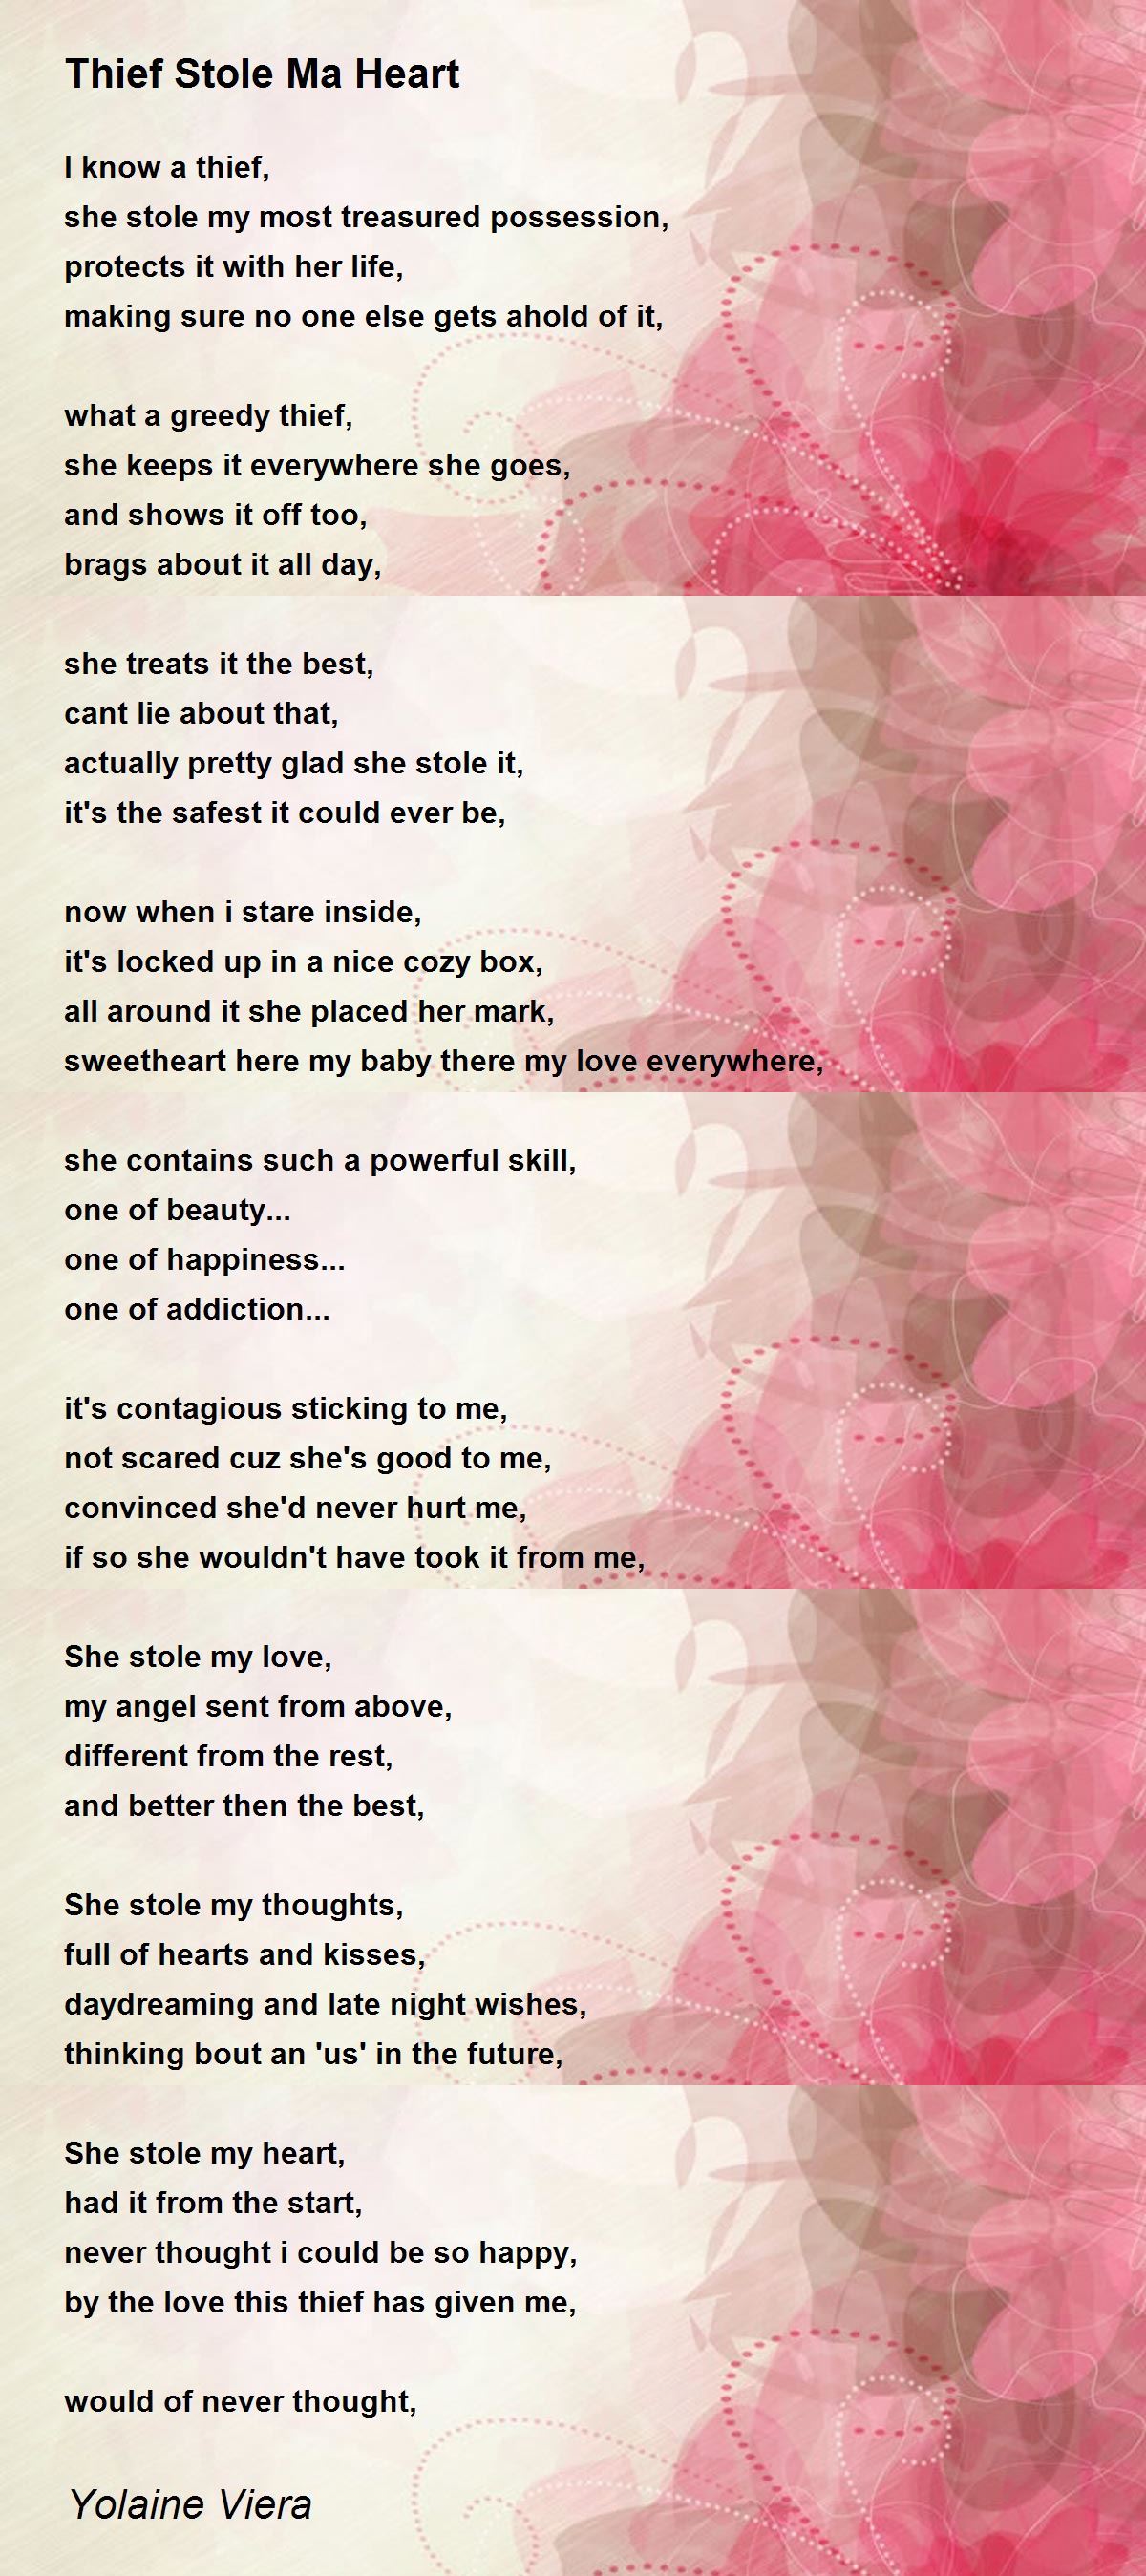 I Feel Used - I Feel Used Poem by Yolaine Viera